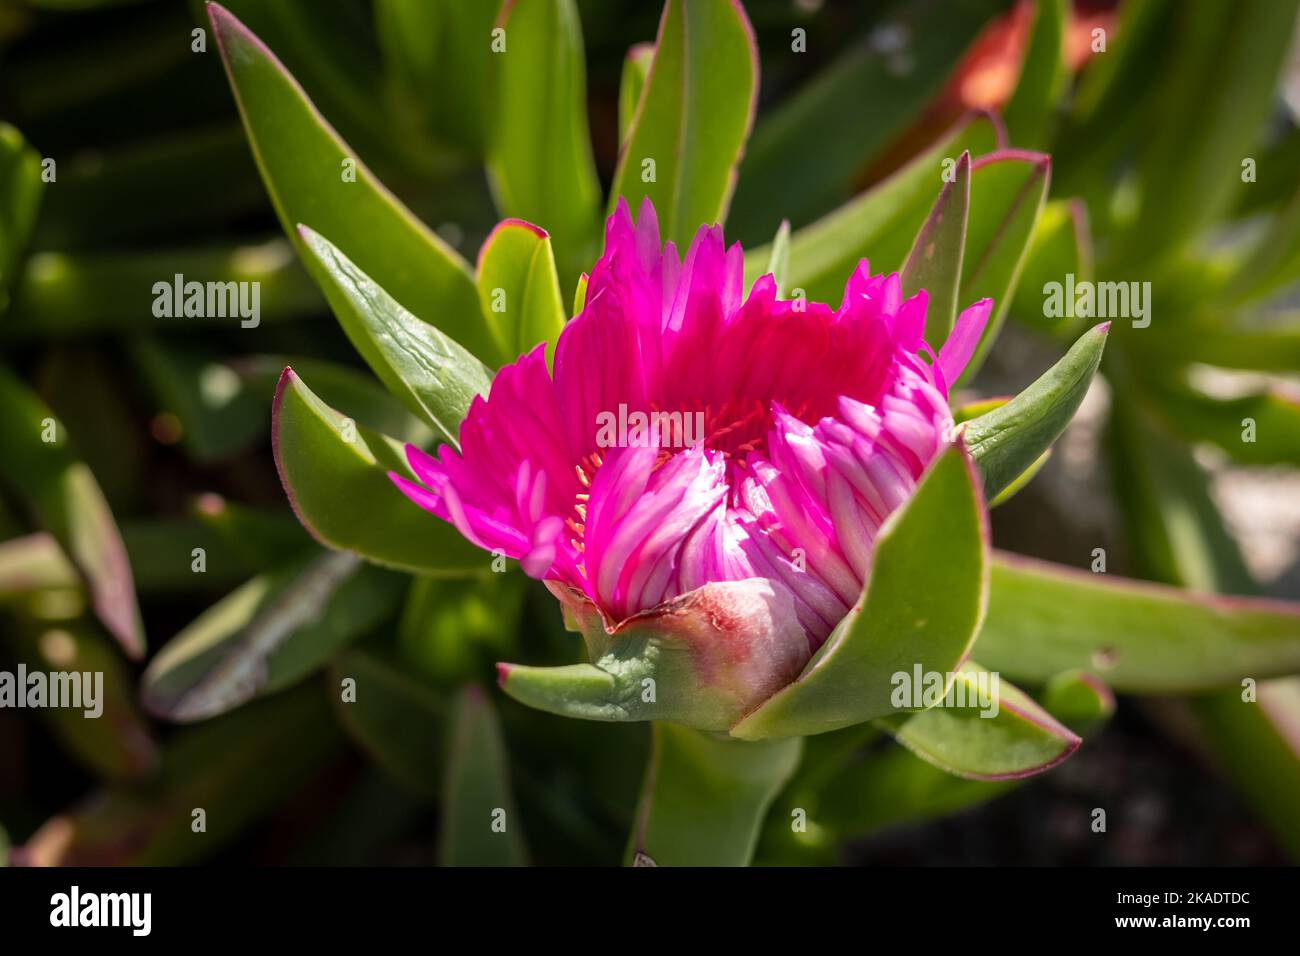 Blooming pink flower of a mediterranean succulent plant pigface (Carpobrotus edulis). Stock Photo